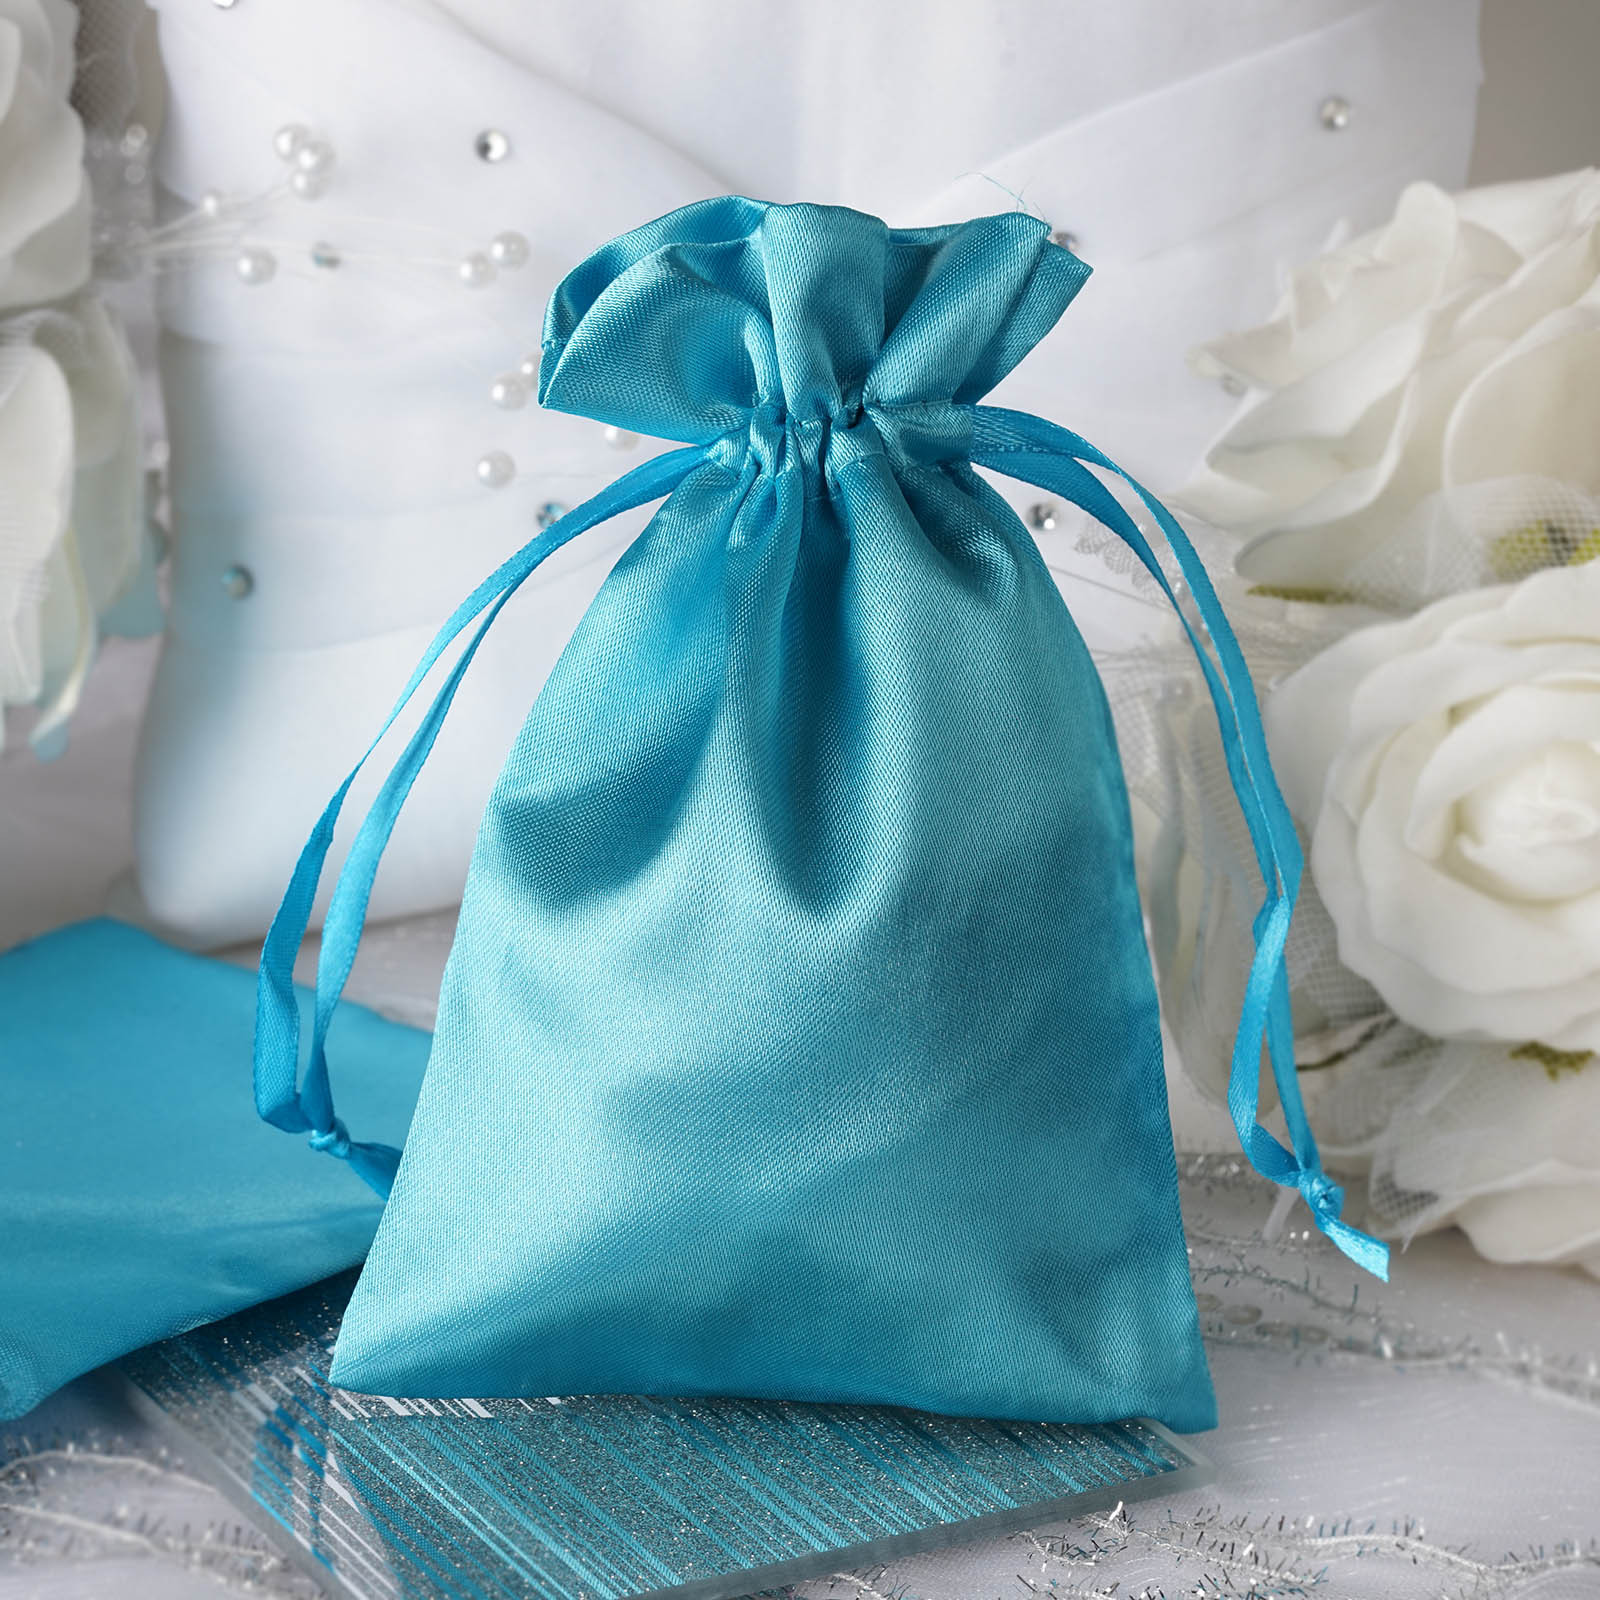 Cheap Wedding Favors In Bulk
 60 pcs 4x5" SATIN FAVOR BAGS Wedding Party Reception Gift